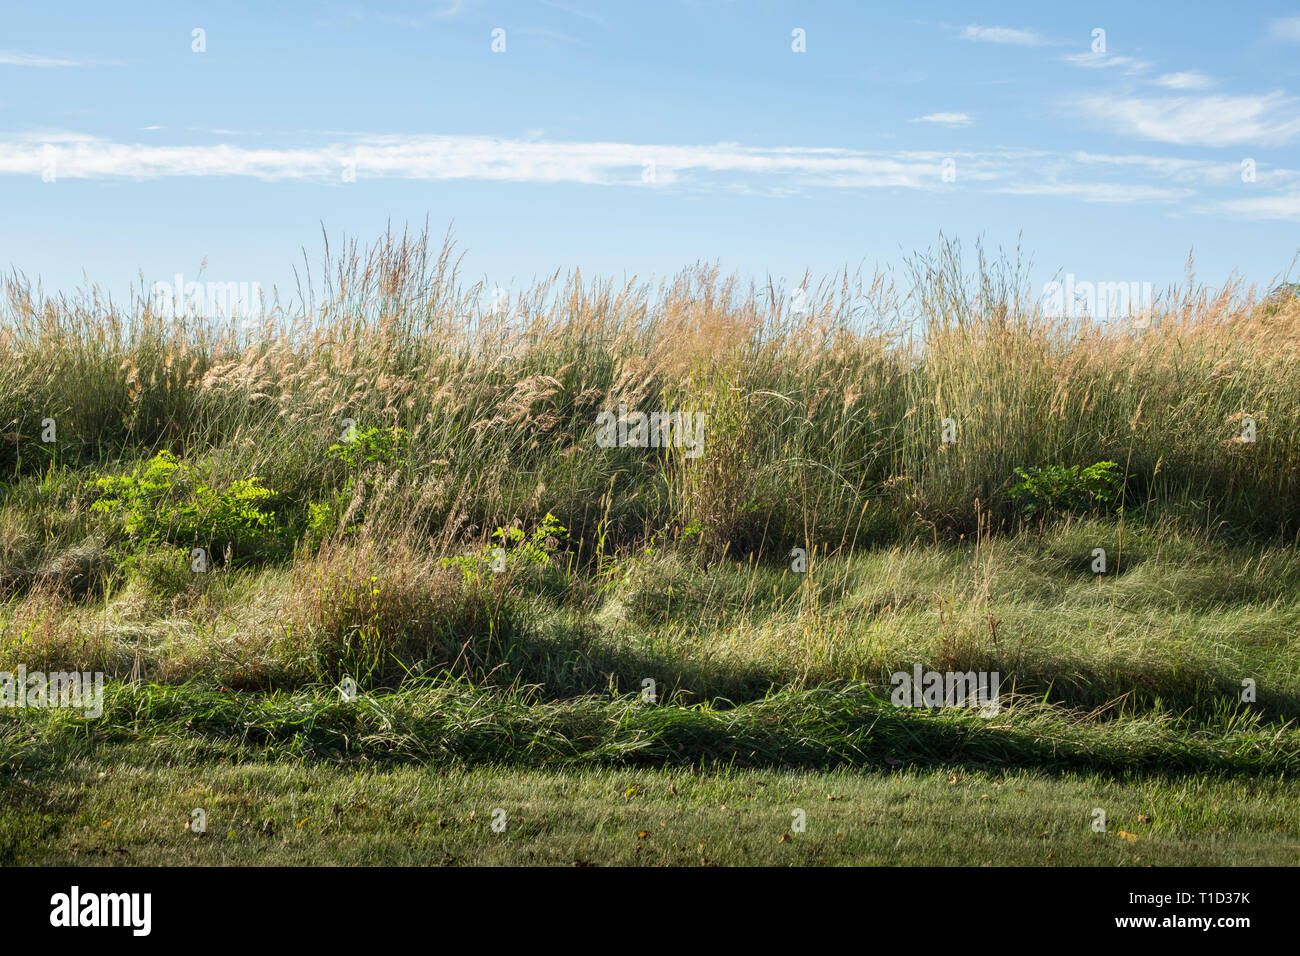 Tall Grasses Along Roadside on Sunny Day Stock Photo